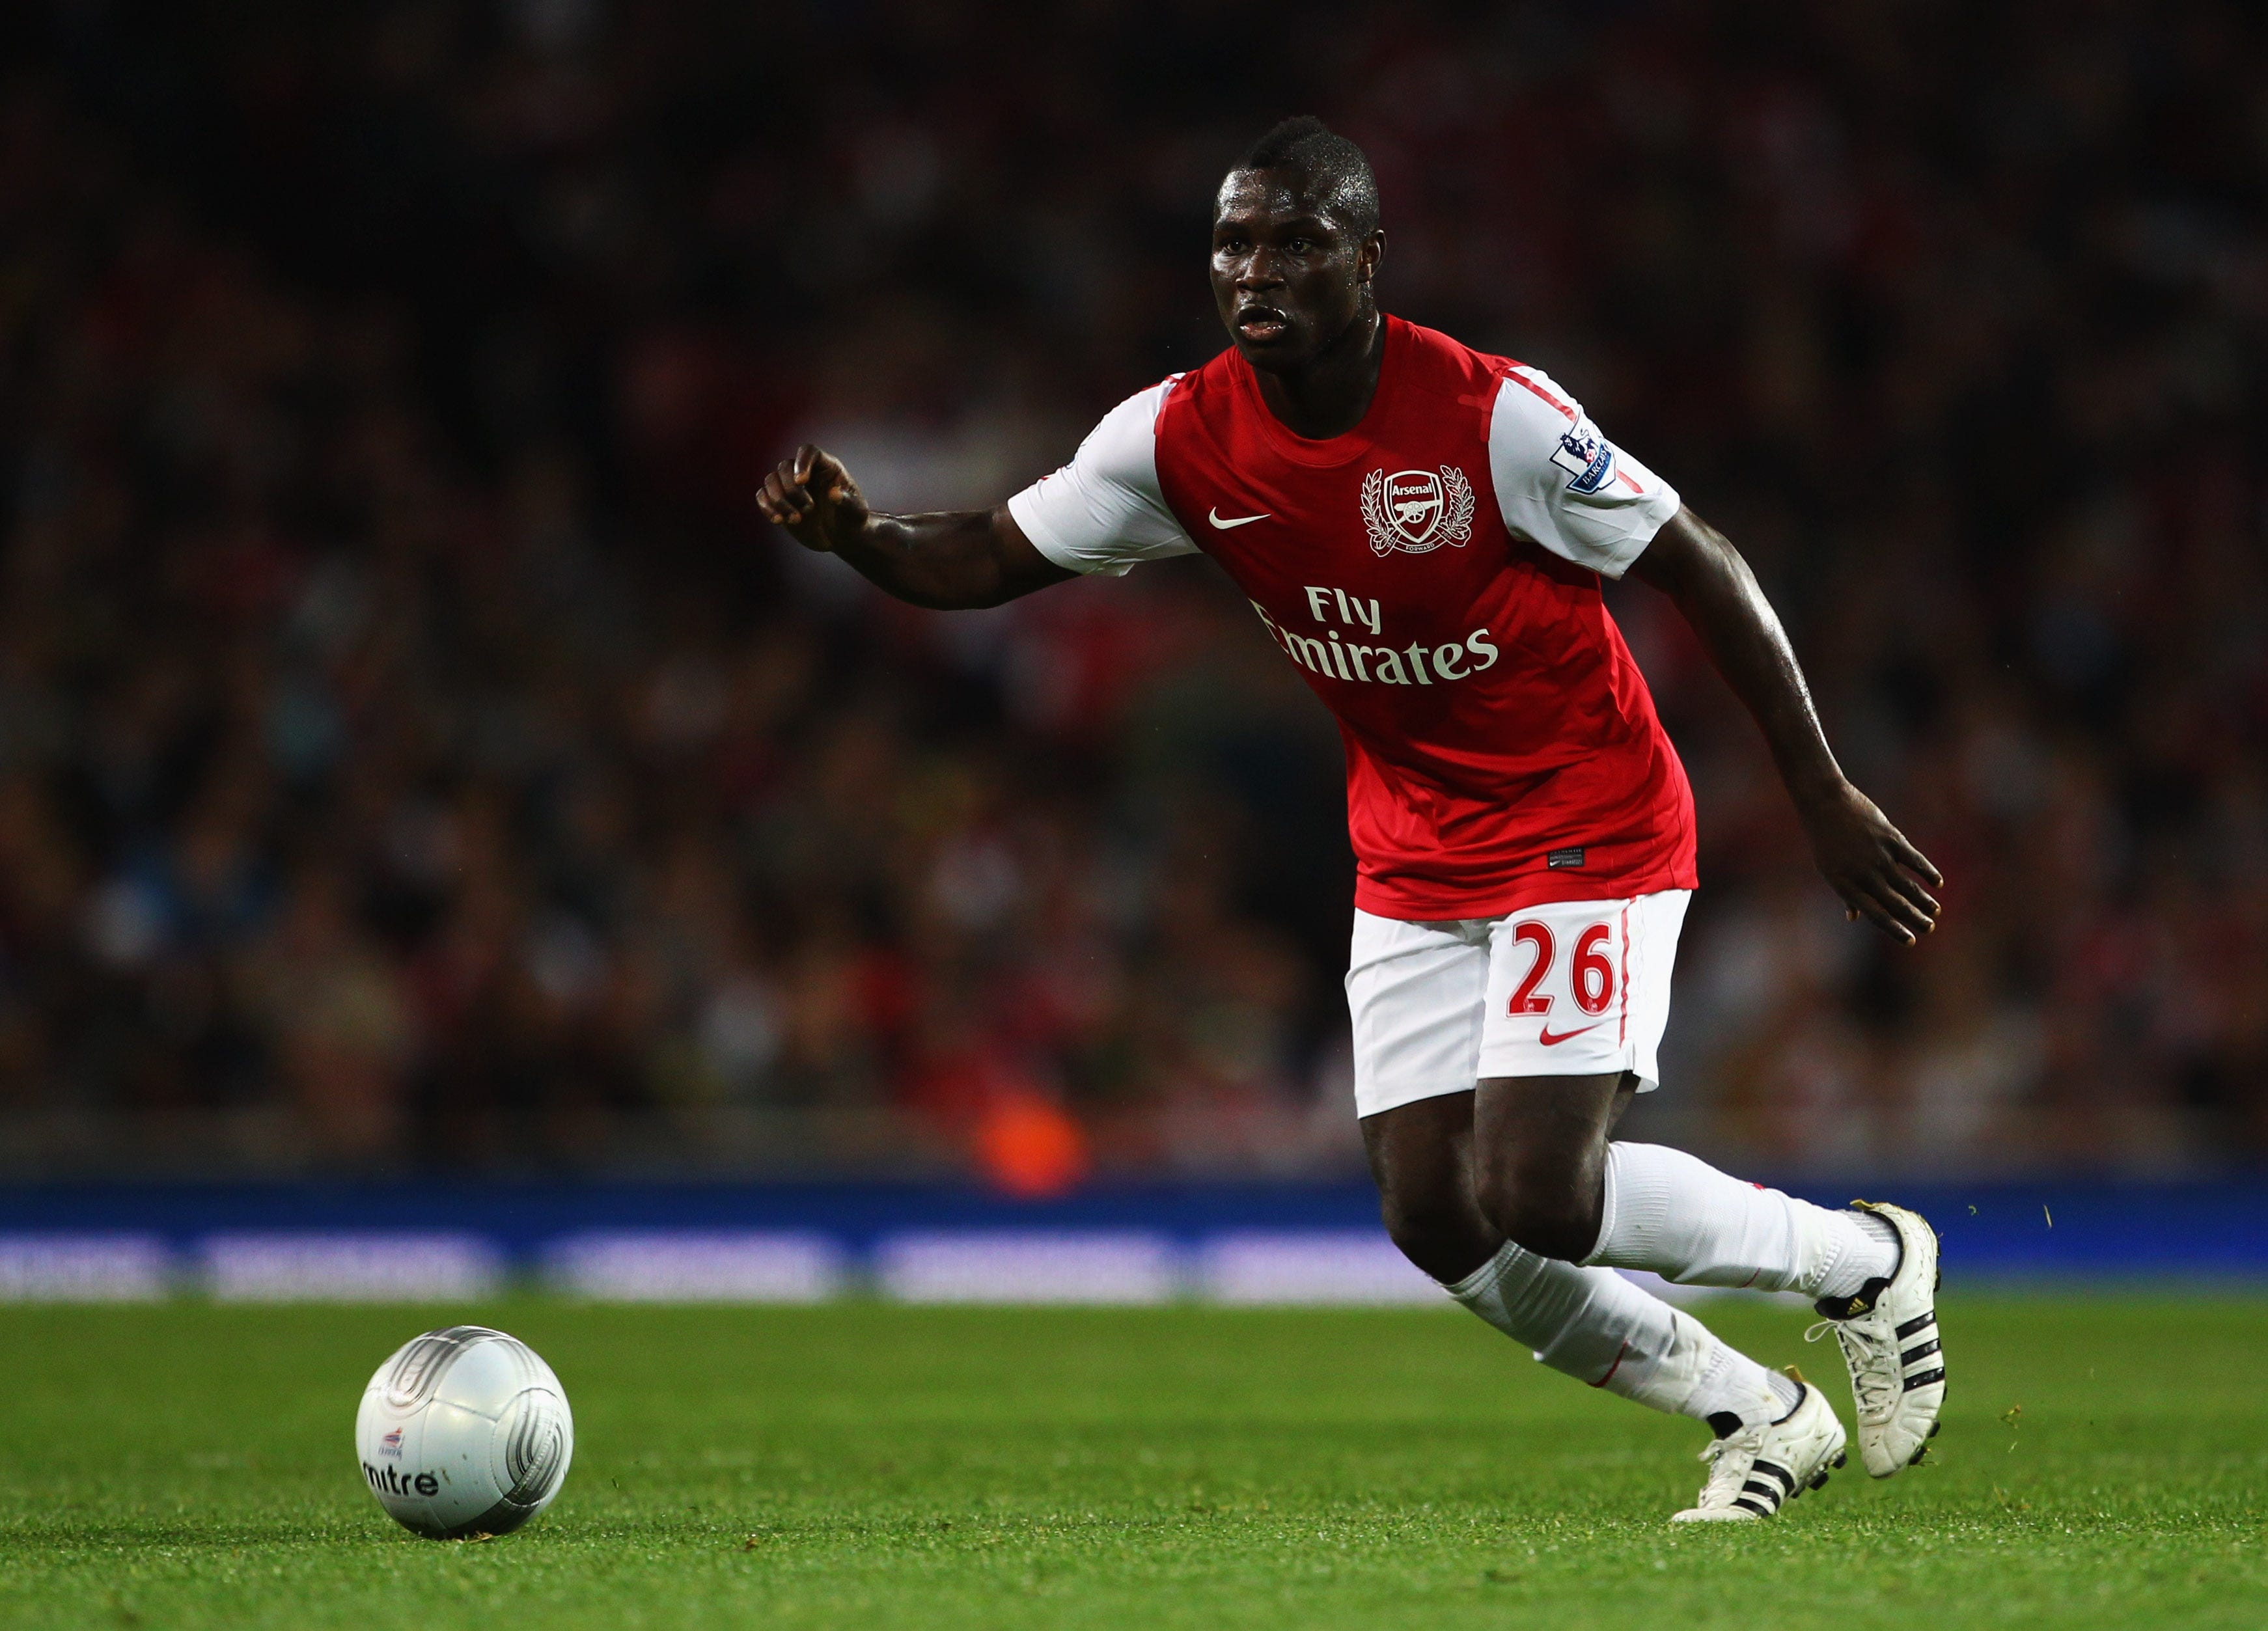 Arsenal midfielder Emmanuel Frimpong